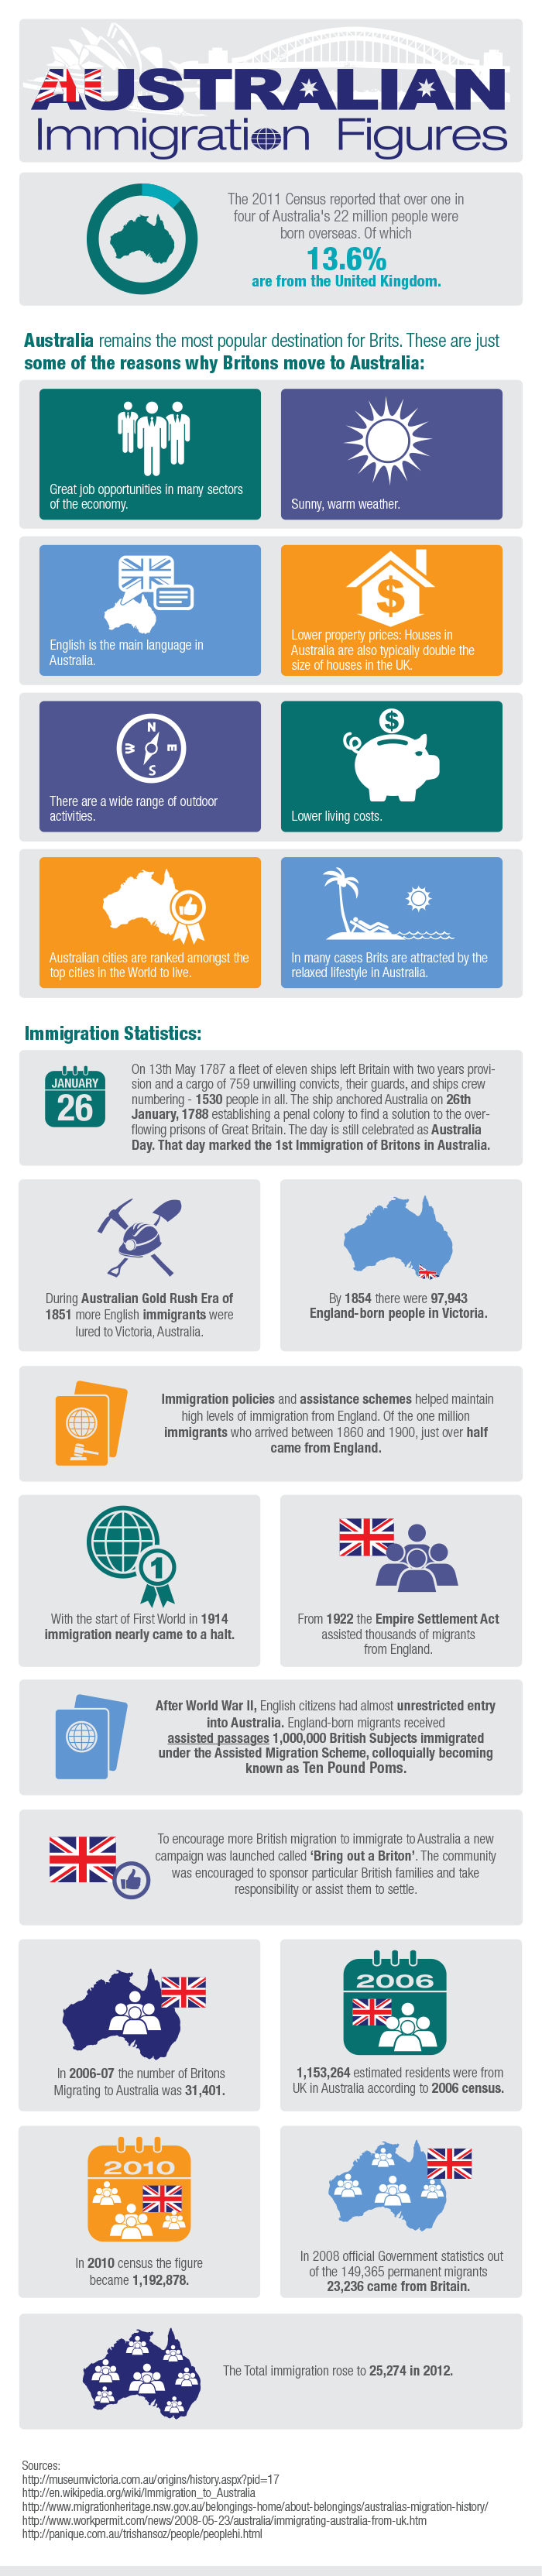 Australian Immigration Figures